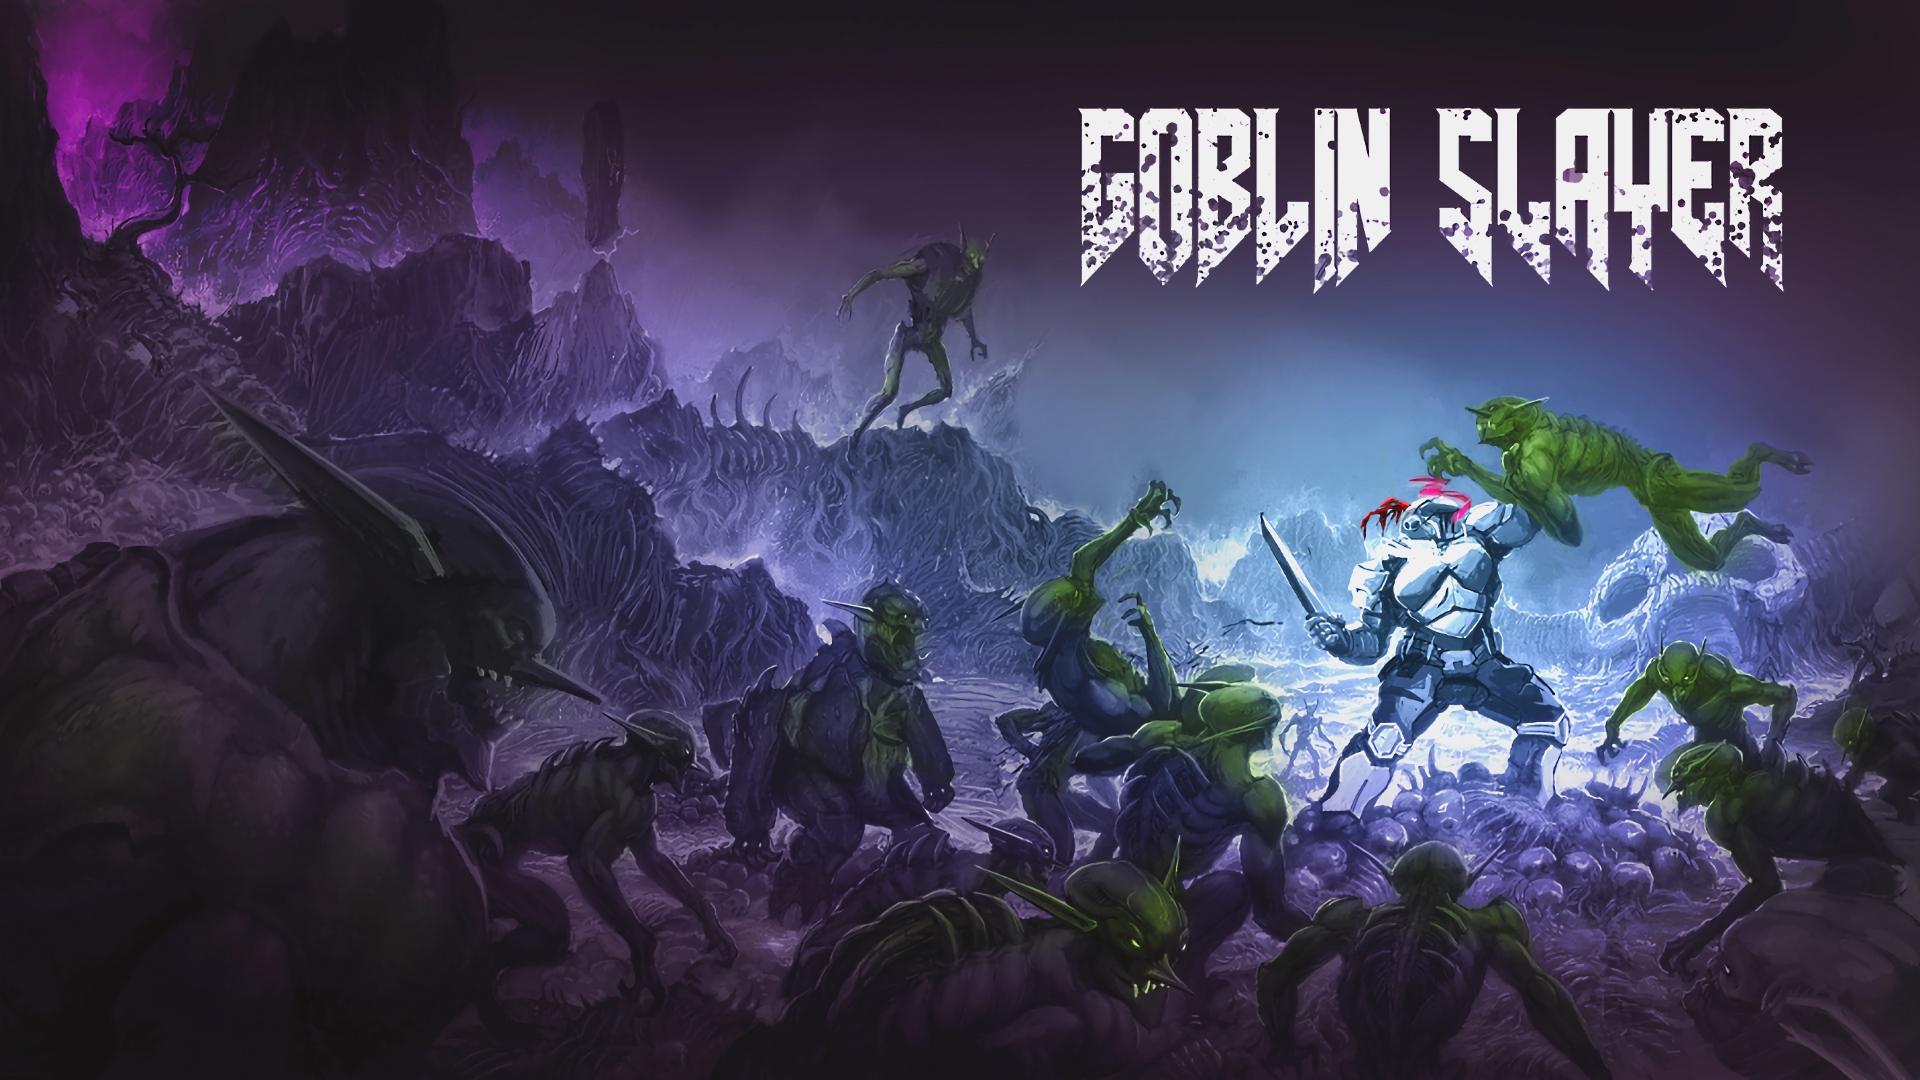 Goblin Slayer: Goblin’s Crown